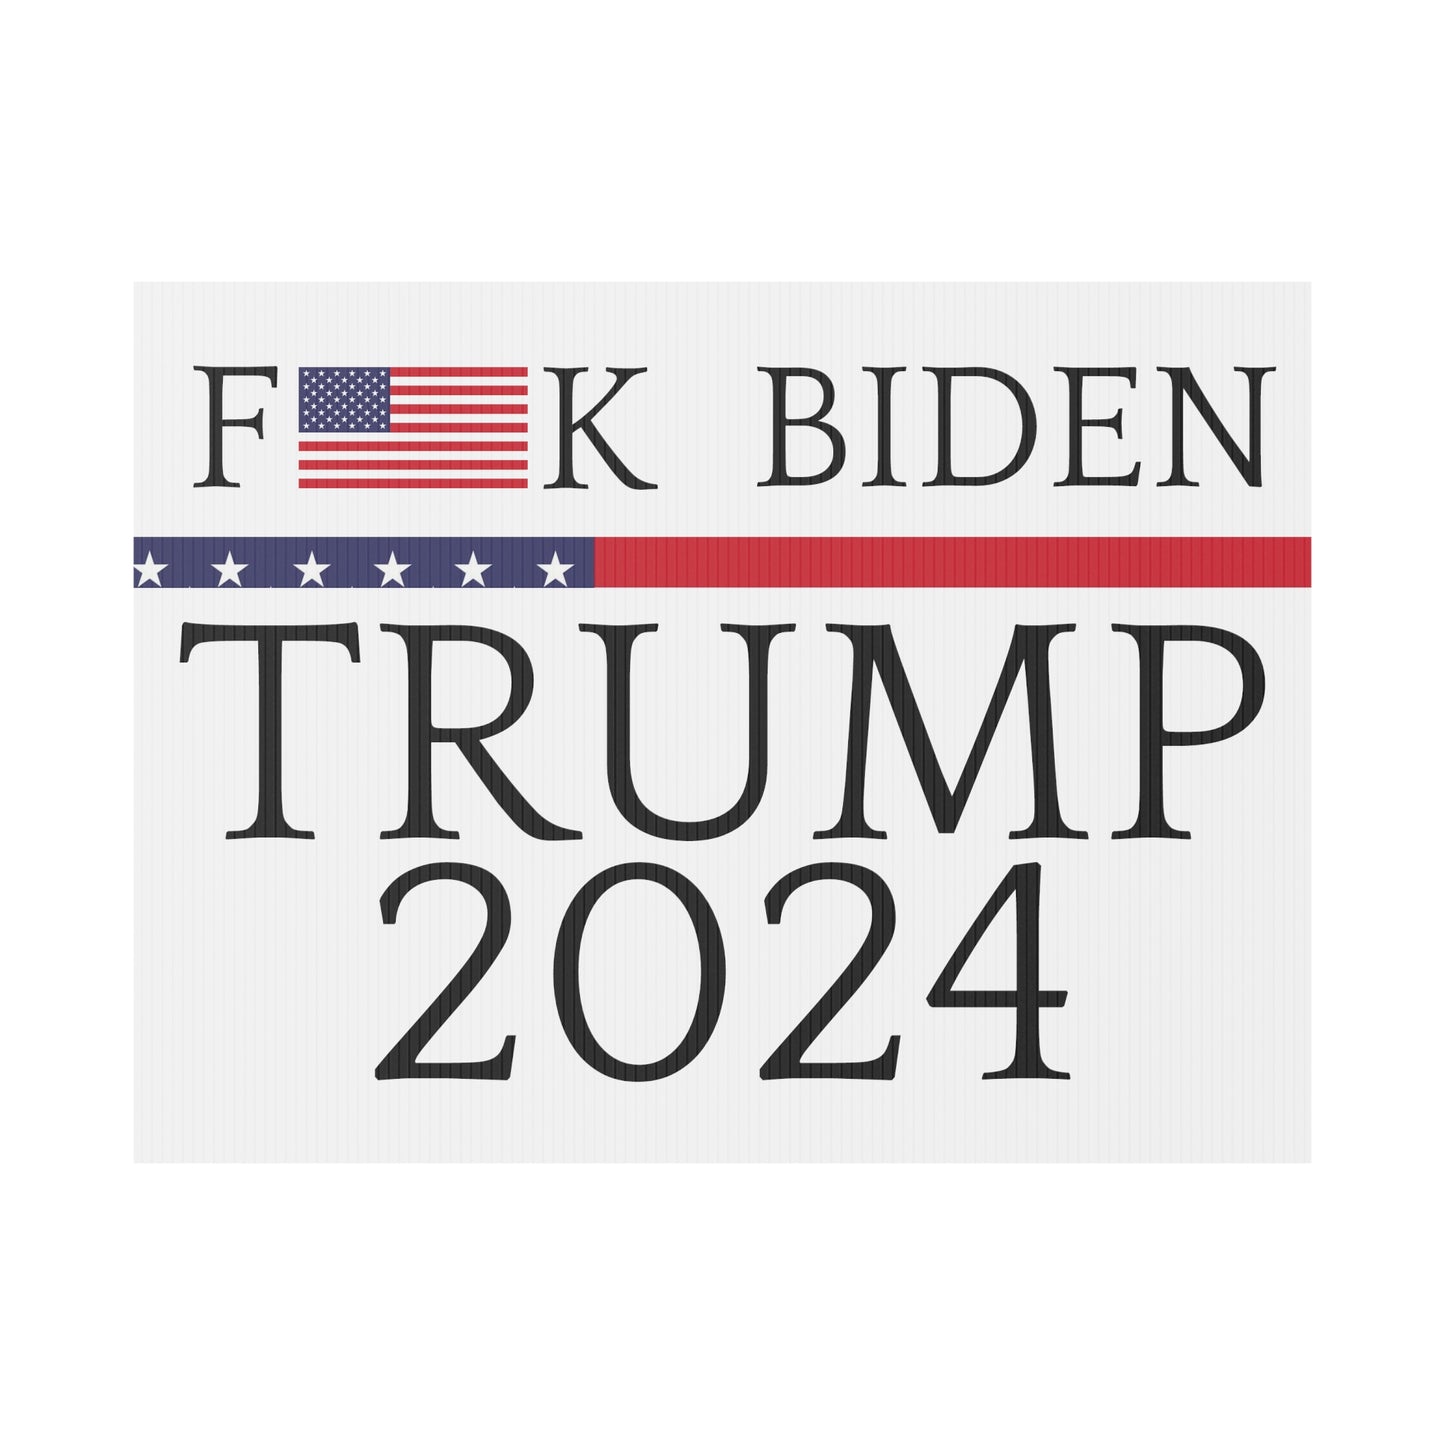 F**K Biden, TRUMP 2024 for President Plastic Yard Sign